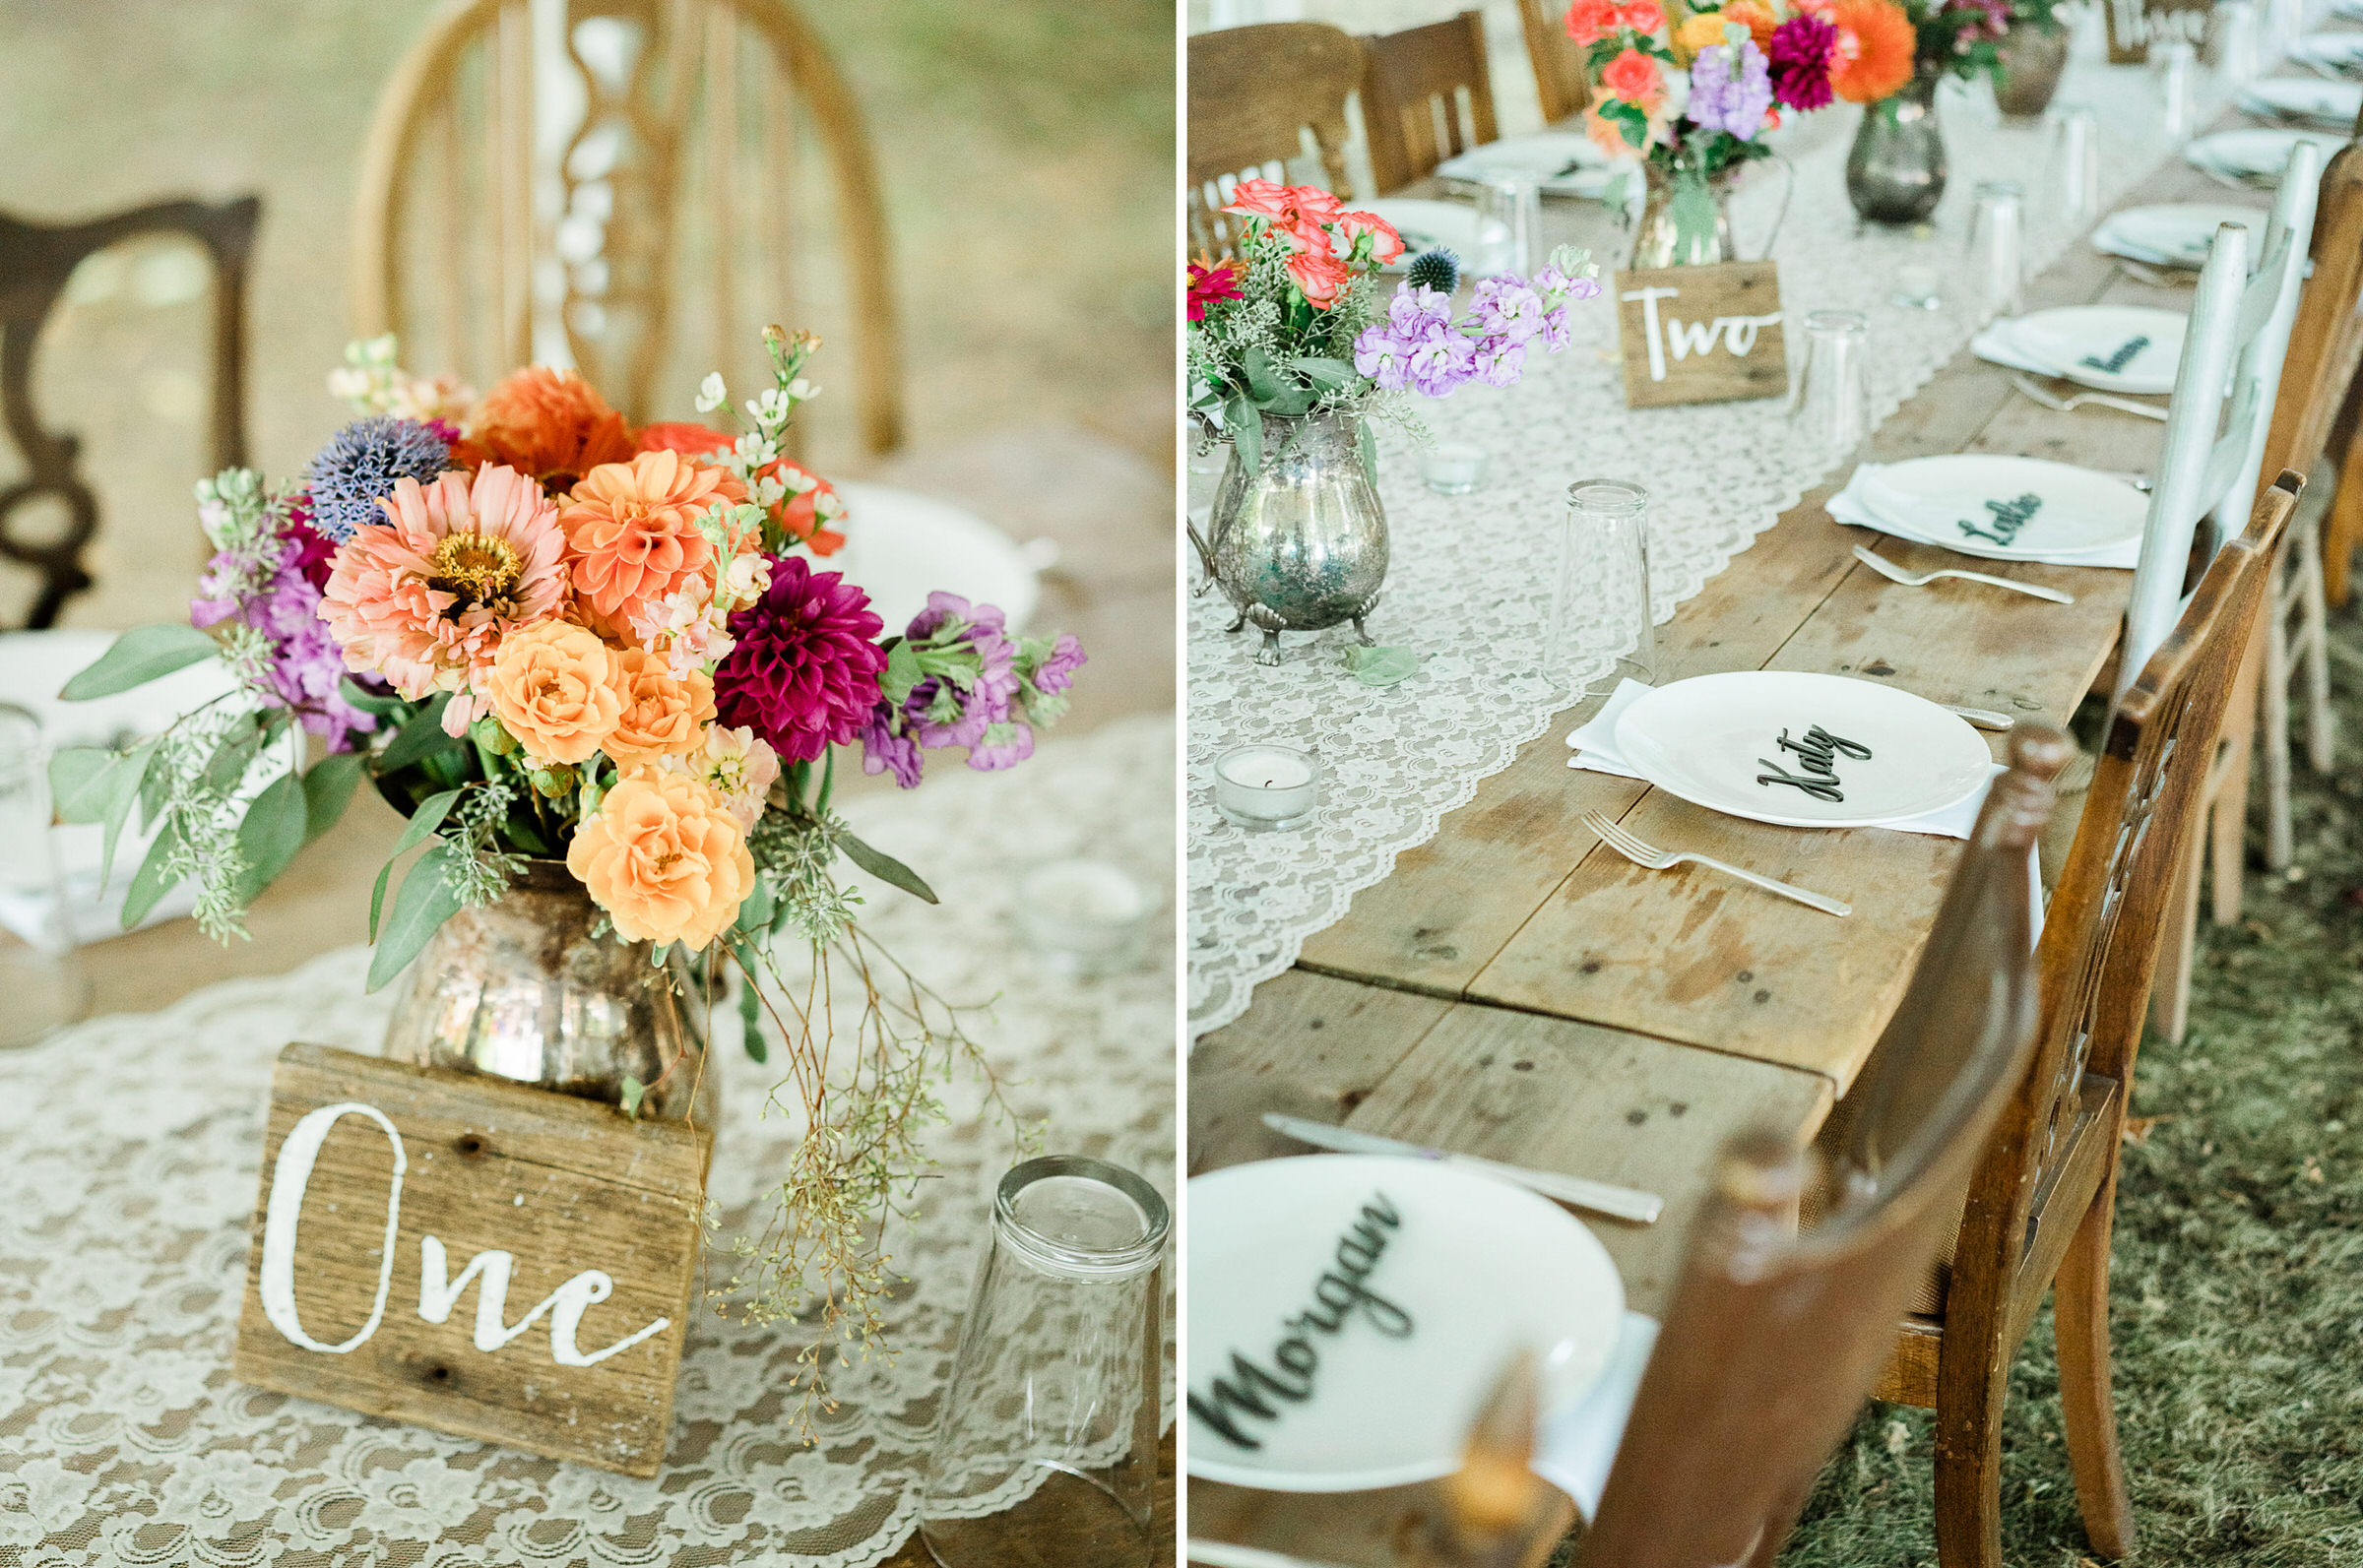 Wayfarer Whidbey Island Wedding: Summer table arrangements for a wedding